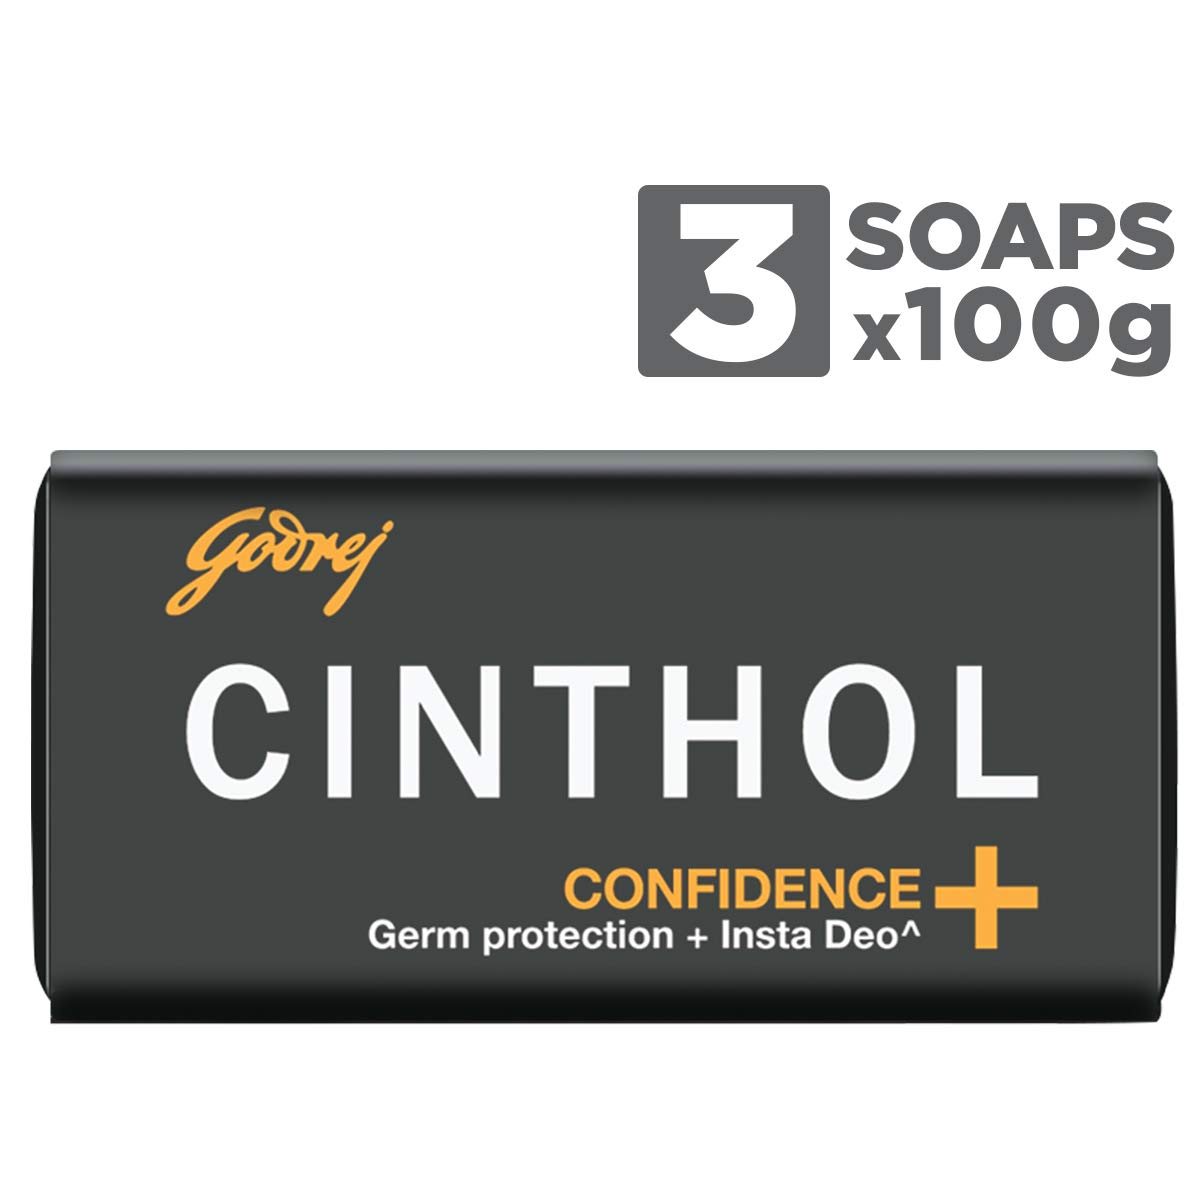 Cinthol Health+ Bath Soap 99.9% Germ Protection, 100g (Pack of 3)